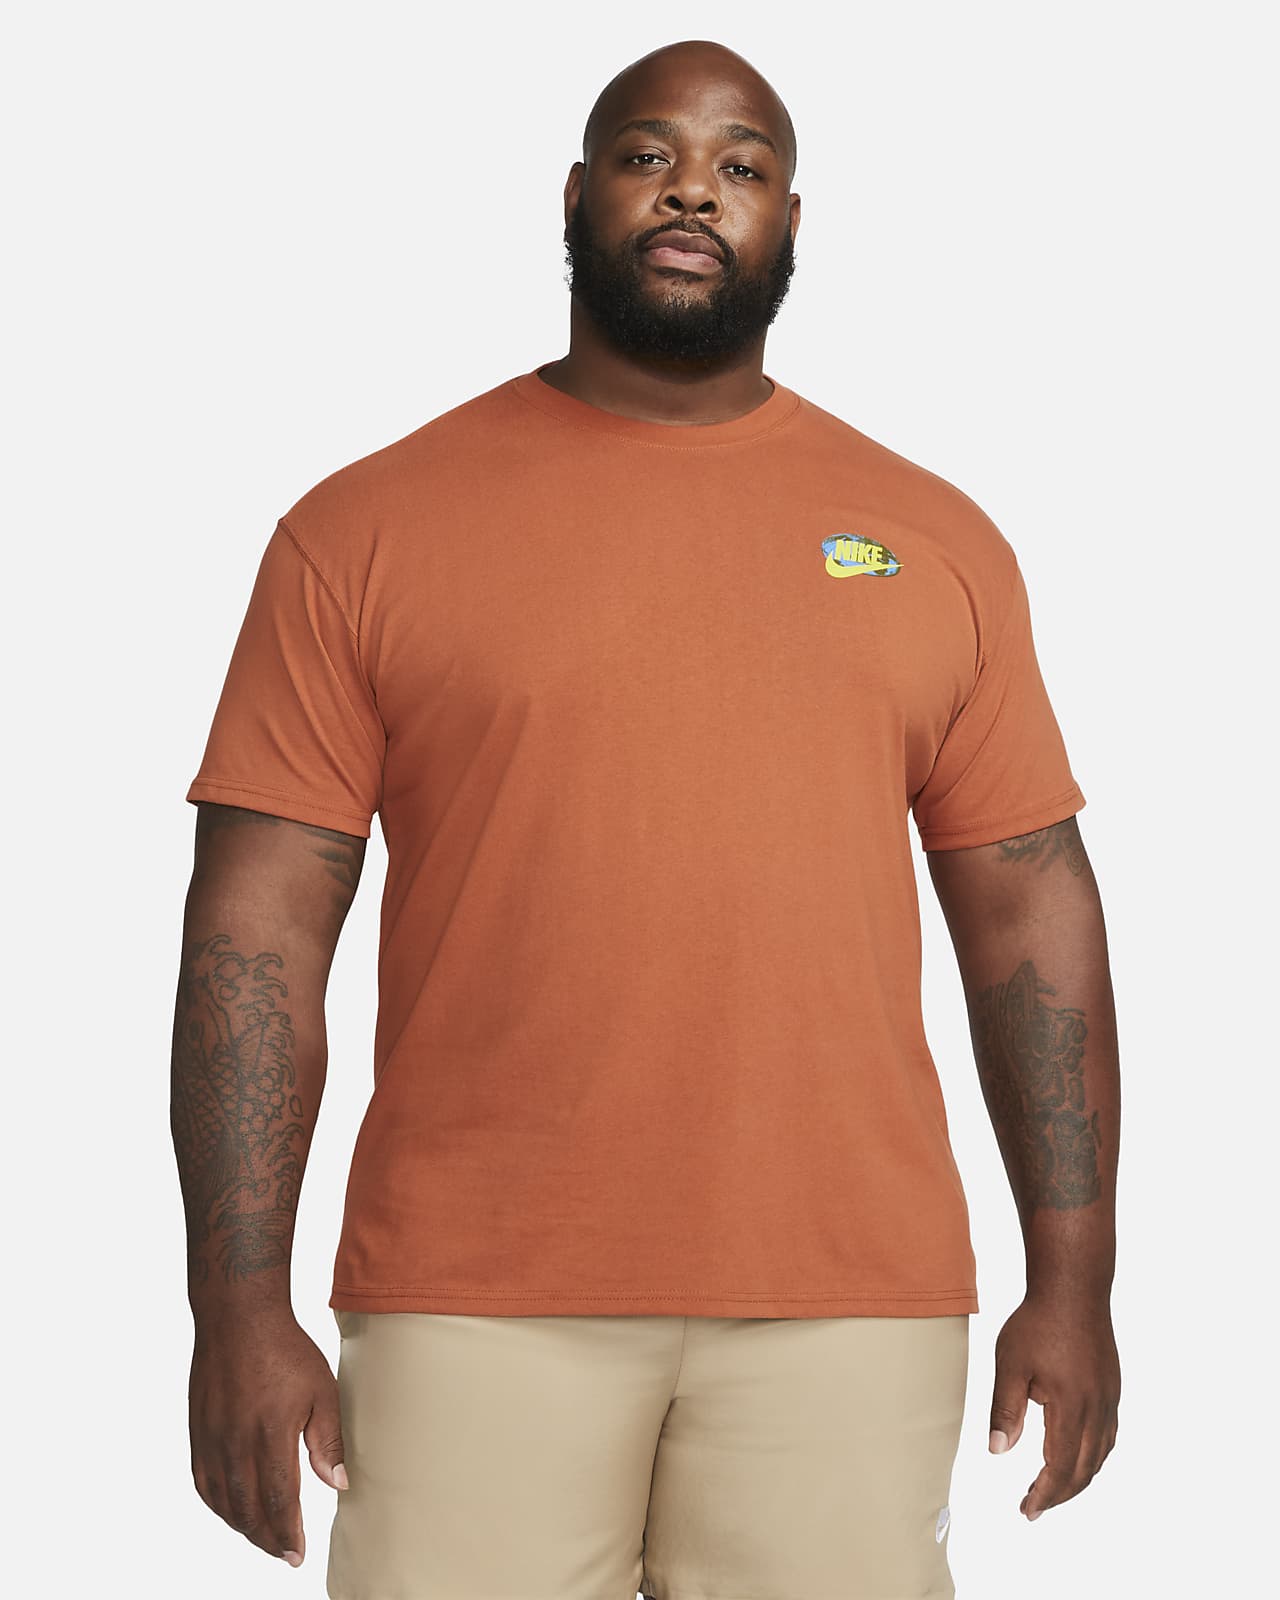 Gildan Men's T-Shirt - Orange - M